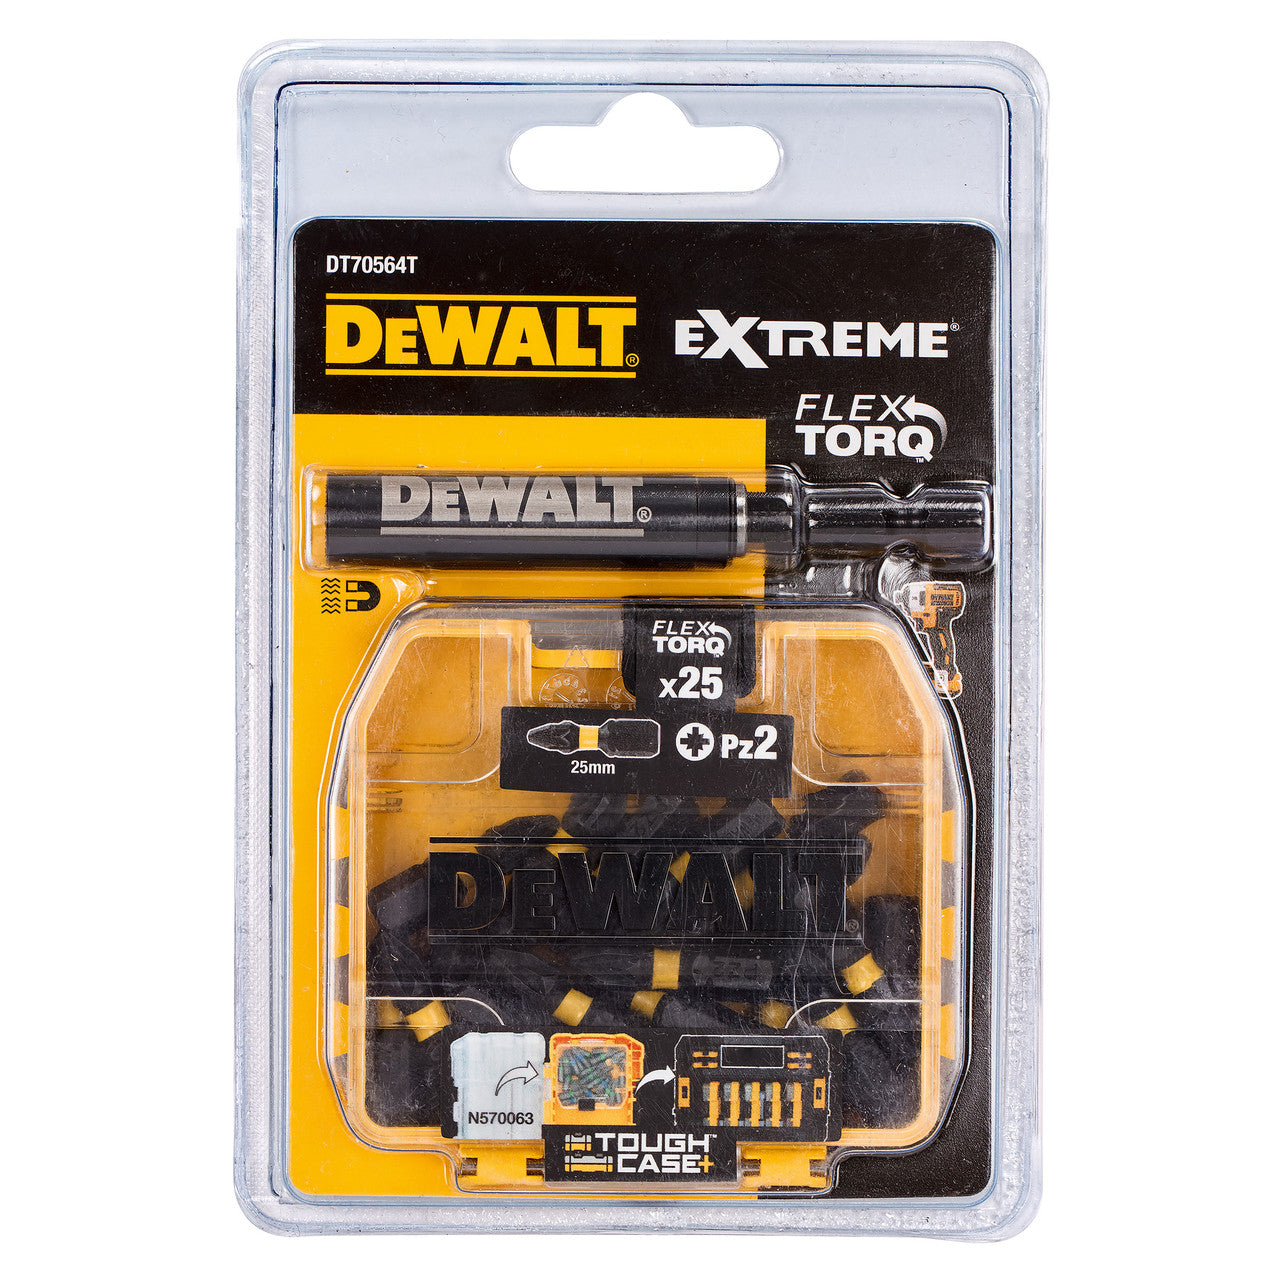 Dewalt DT70564T Extreme FLEXTORQ PZ2 Screwdriver Bits 25mm + Drive Guide (Pack of 25)